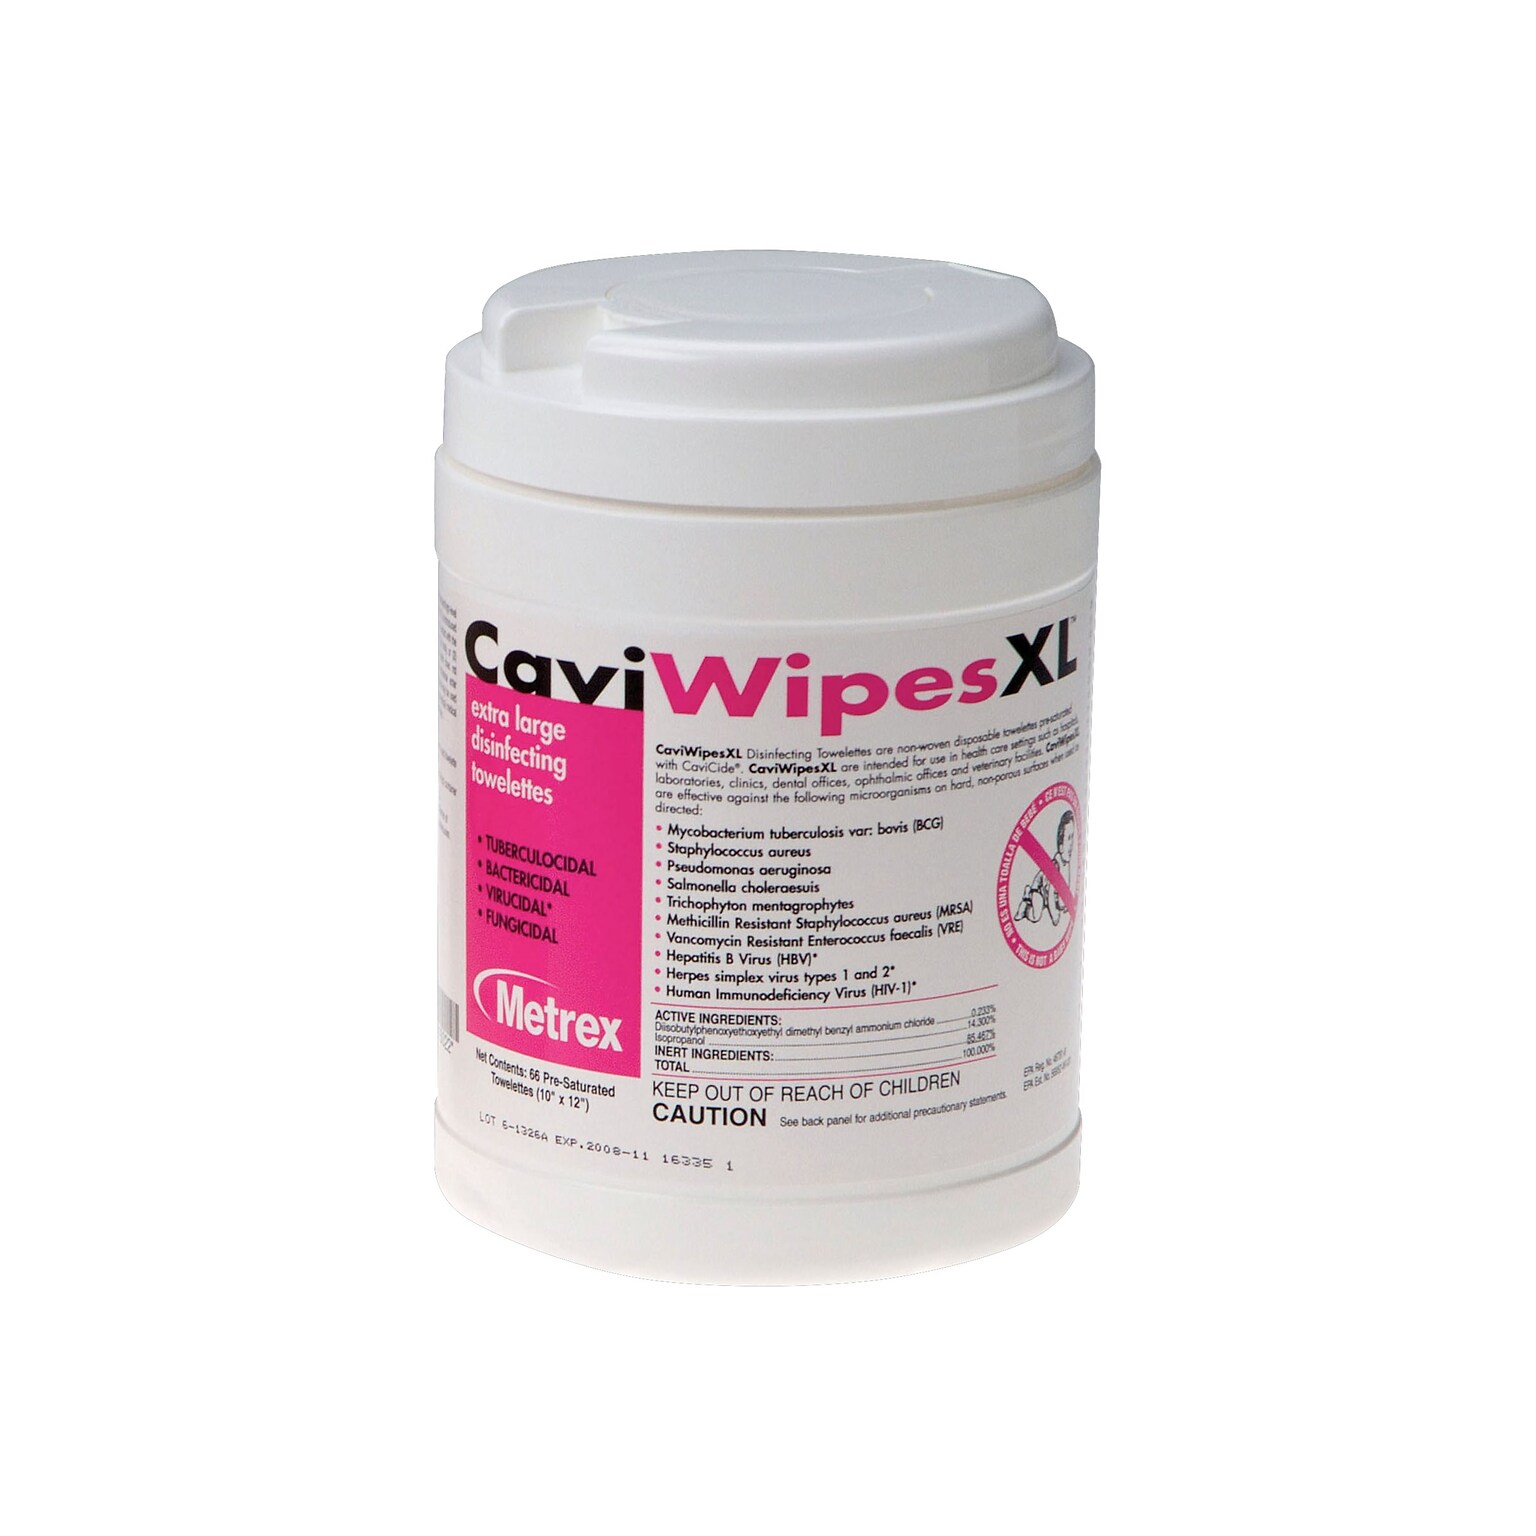 Metrex CaviWipesXL Cleaner Disinfectant Wipes (13-1150)